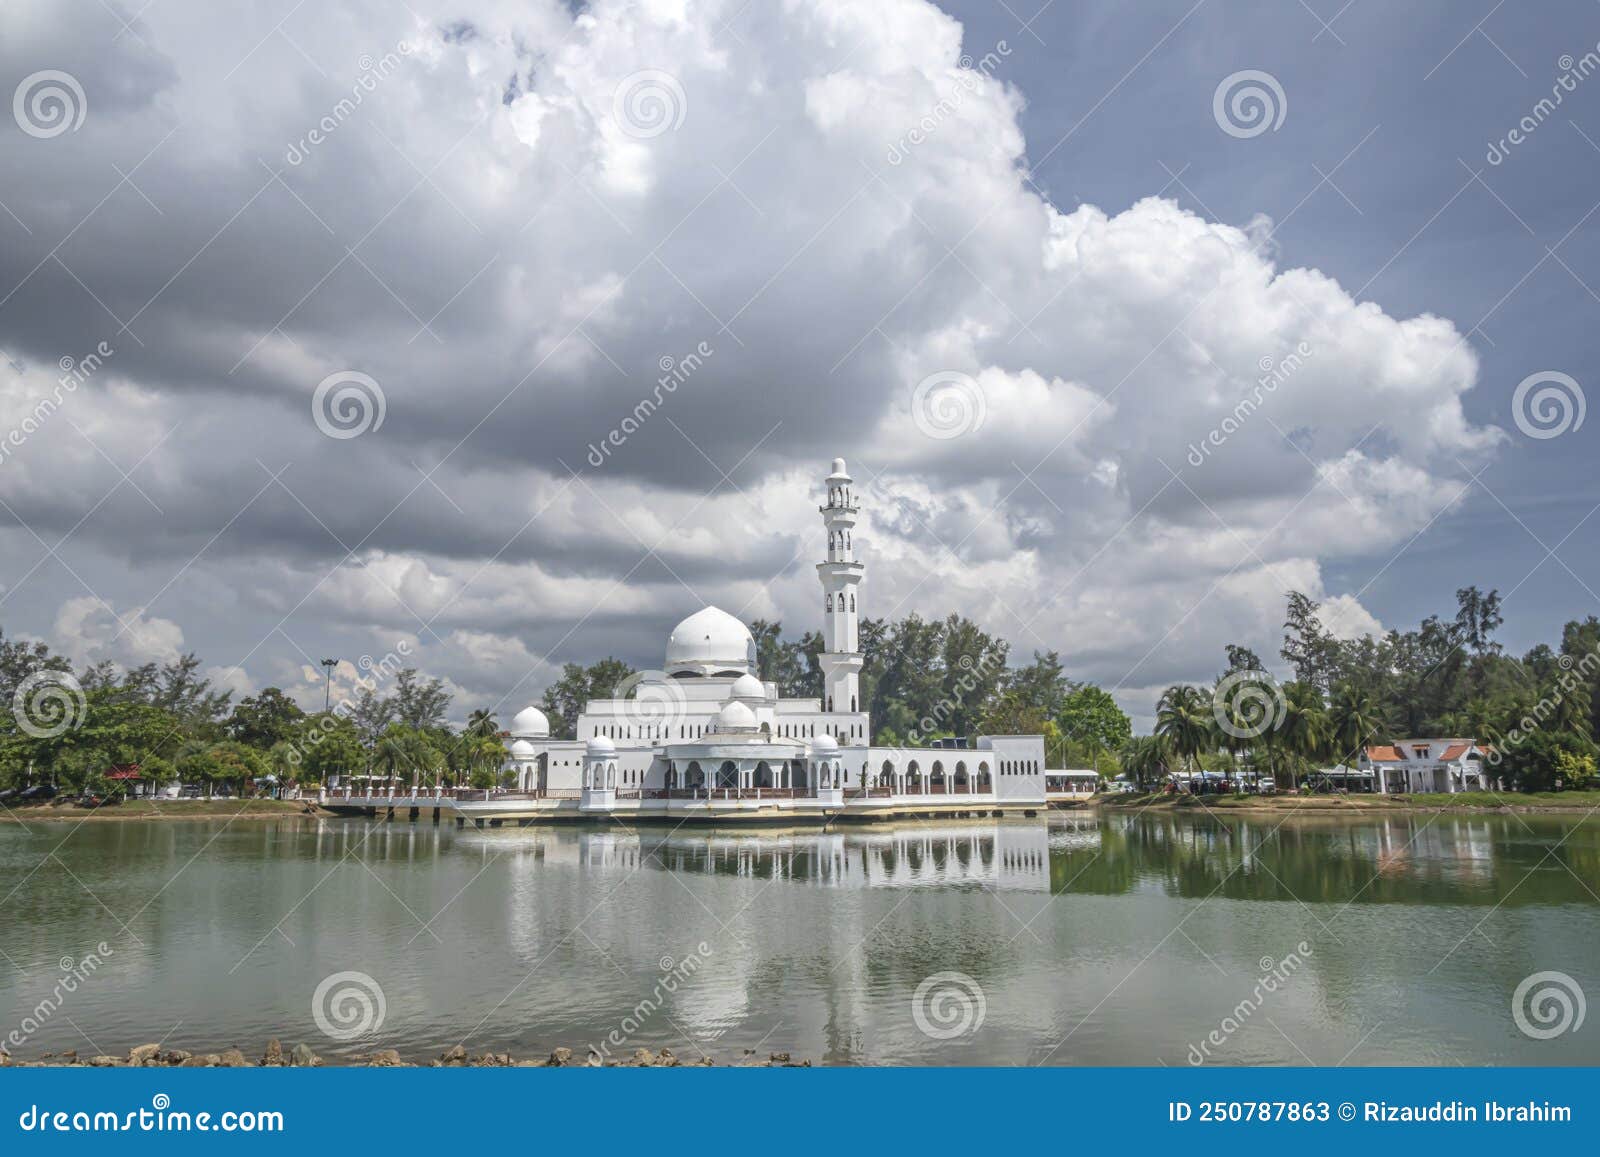 kuala ibai floating mosque or masjid tengu tengah zaharah and its reflection in the water.